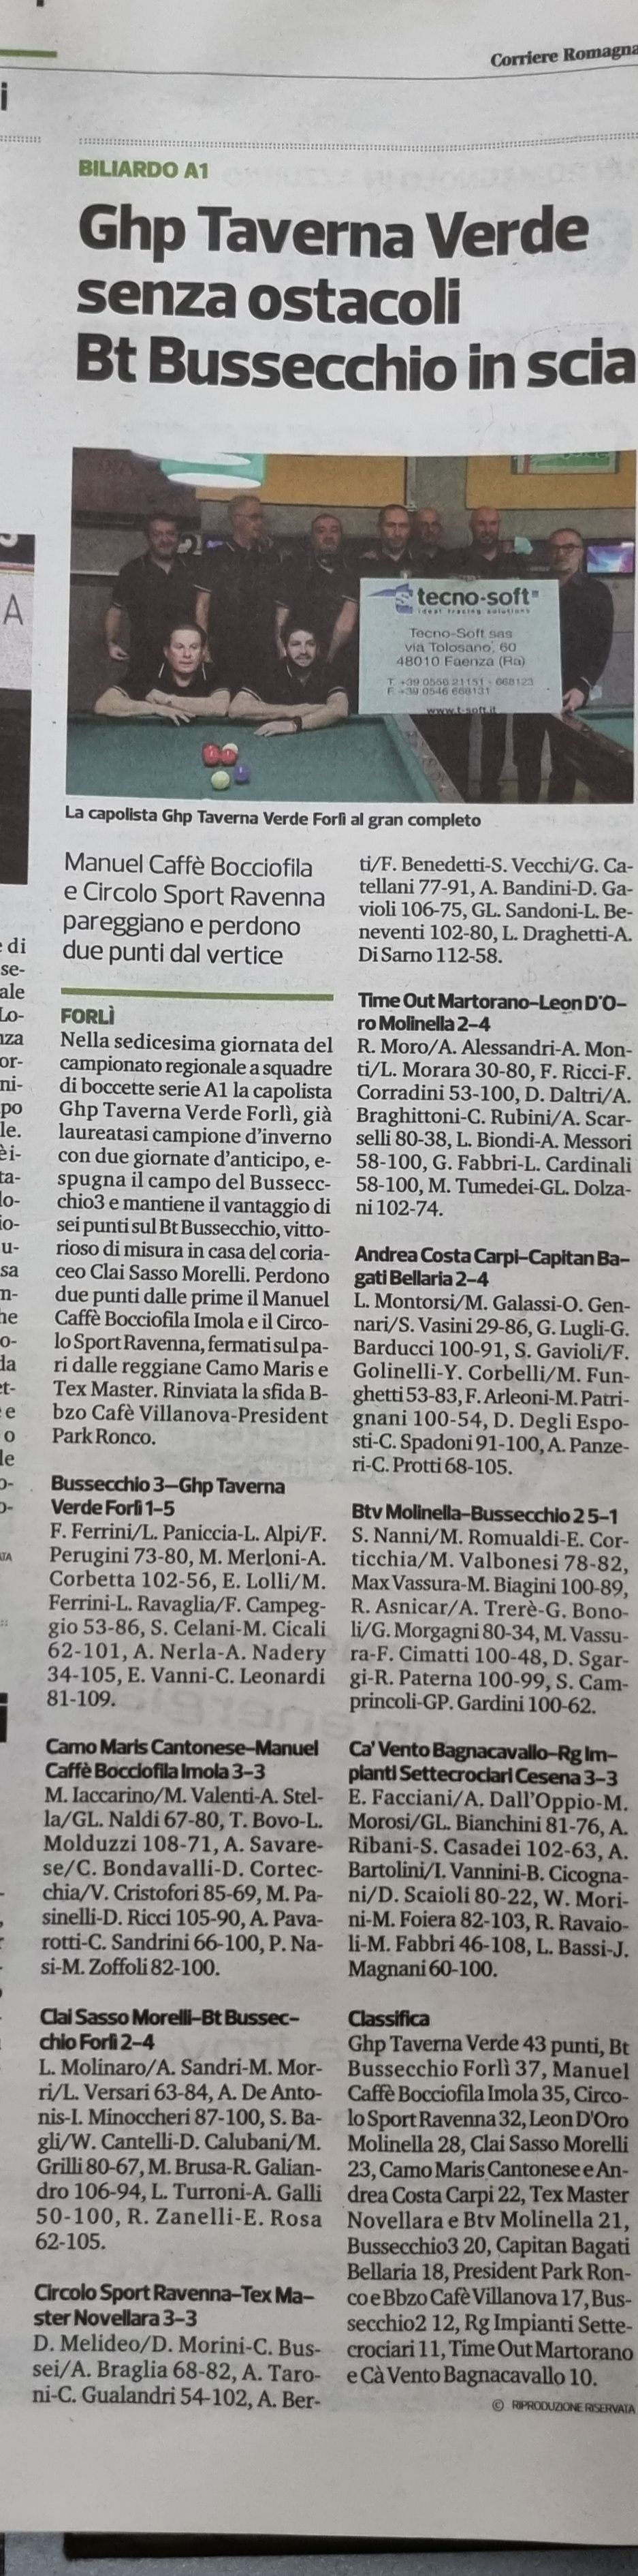 Corriere Romagna Sport 24 dicembre  2021